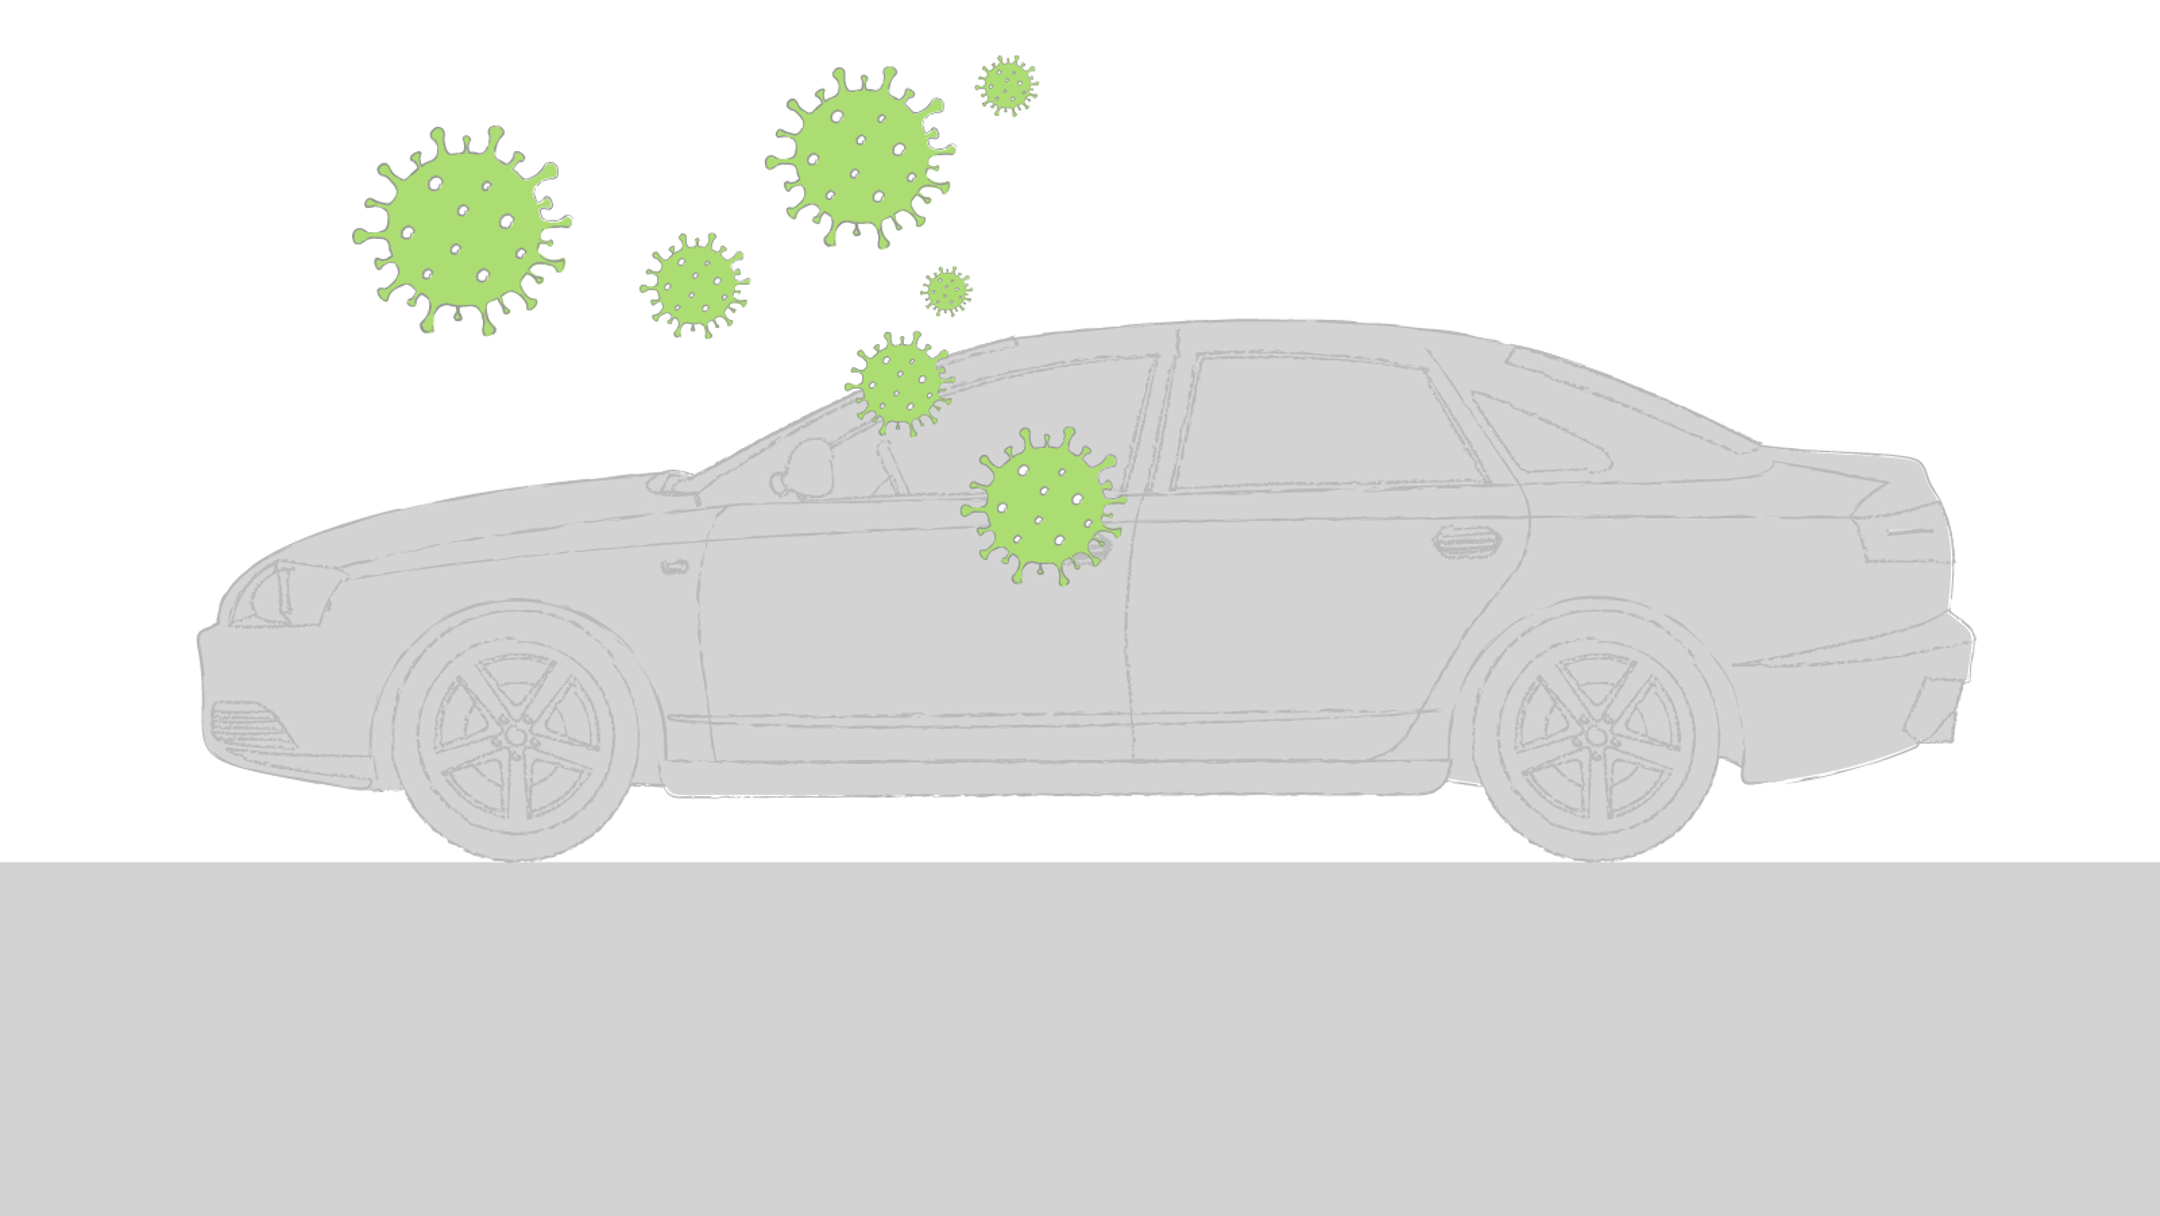 Coronavirus Outbreak: How to Disinfect Your Car's Interior